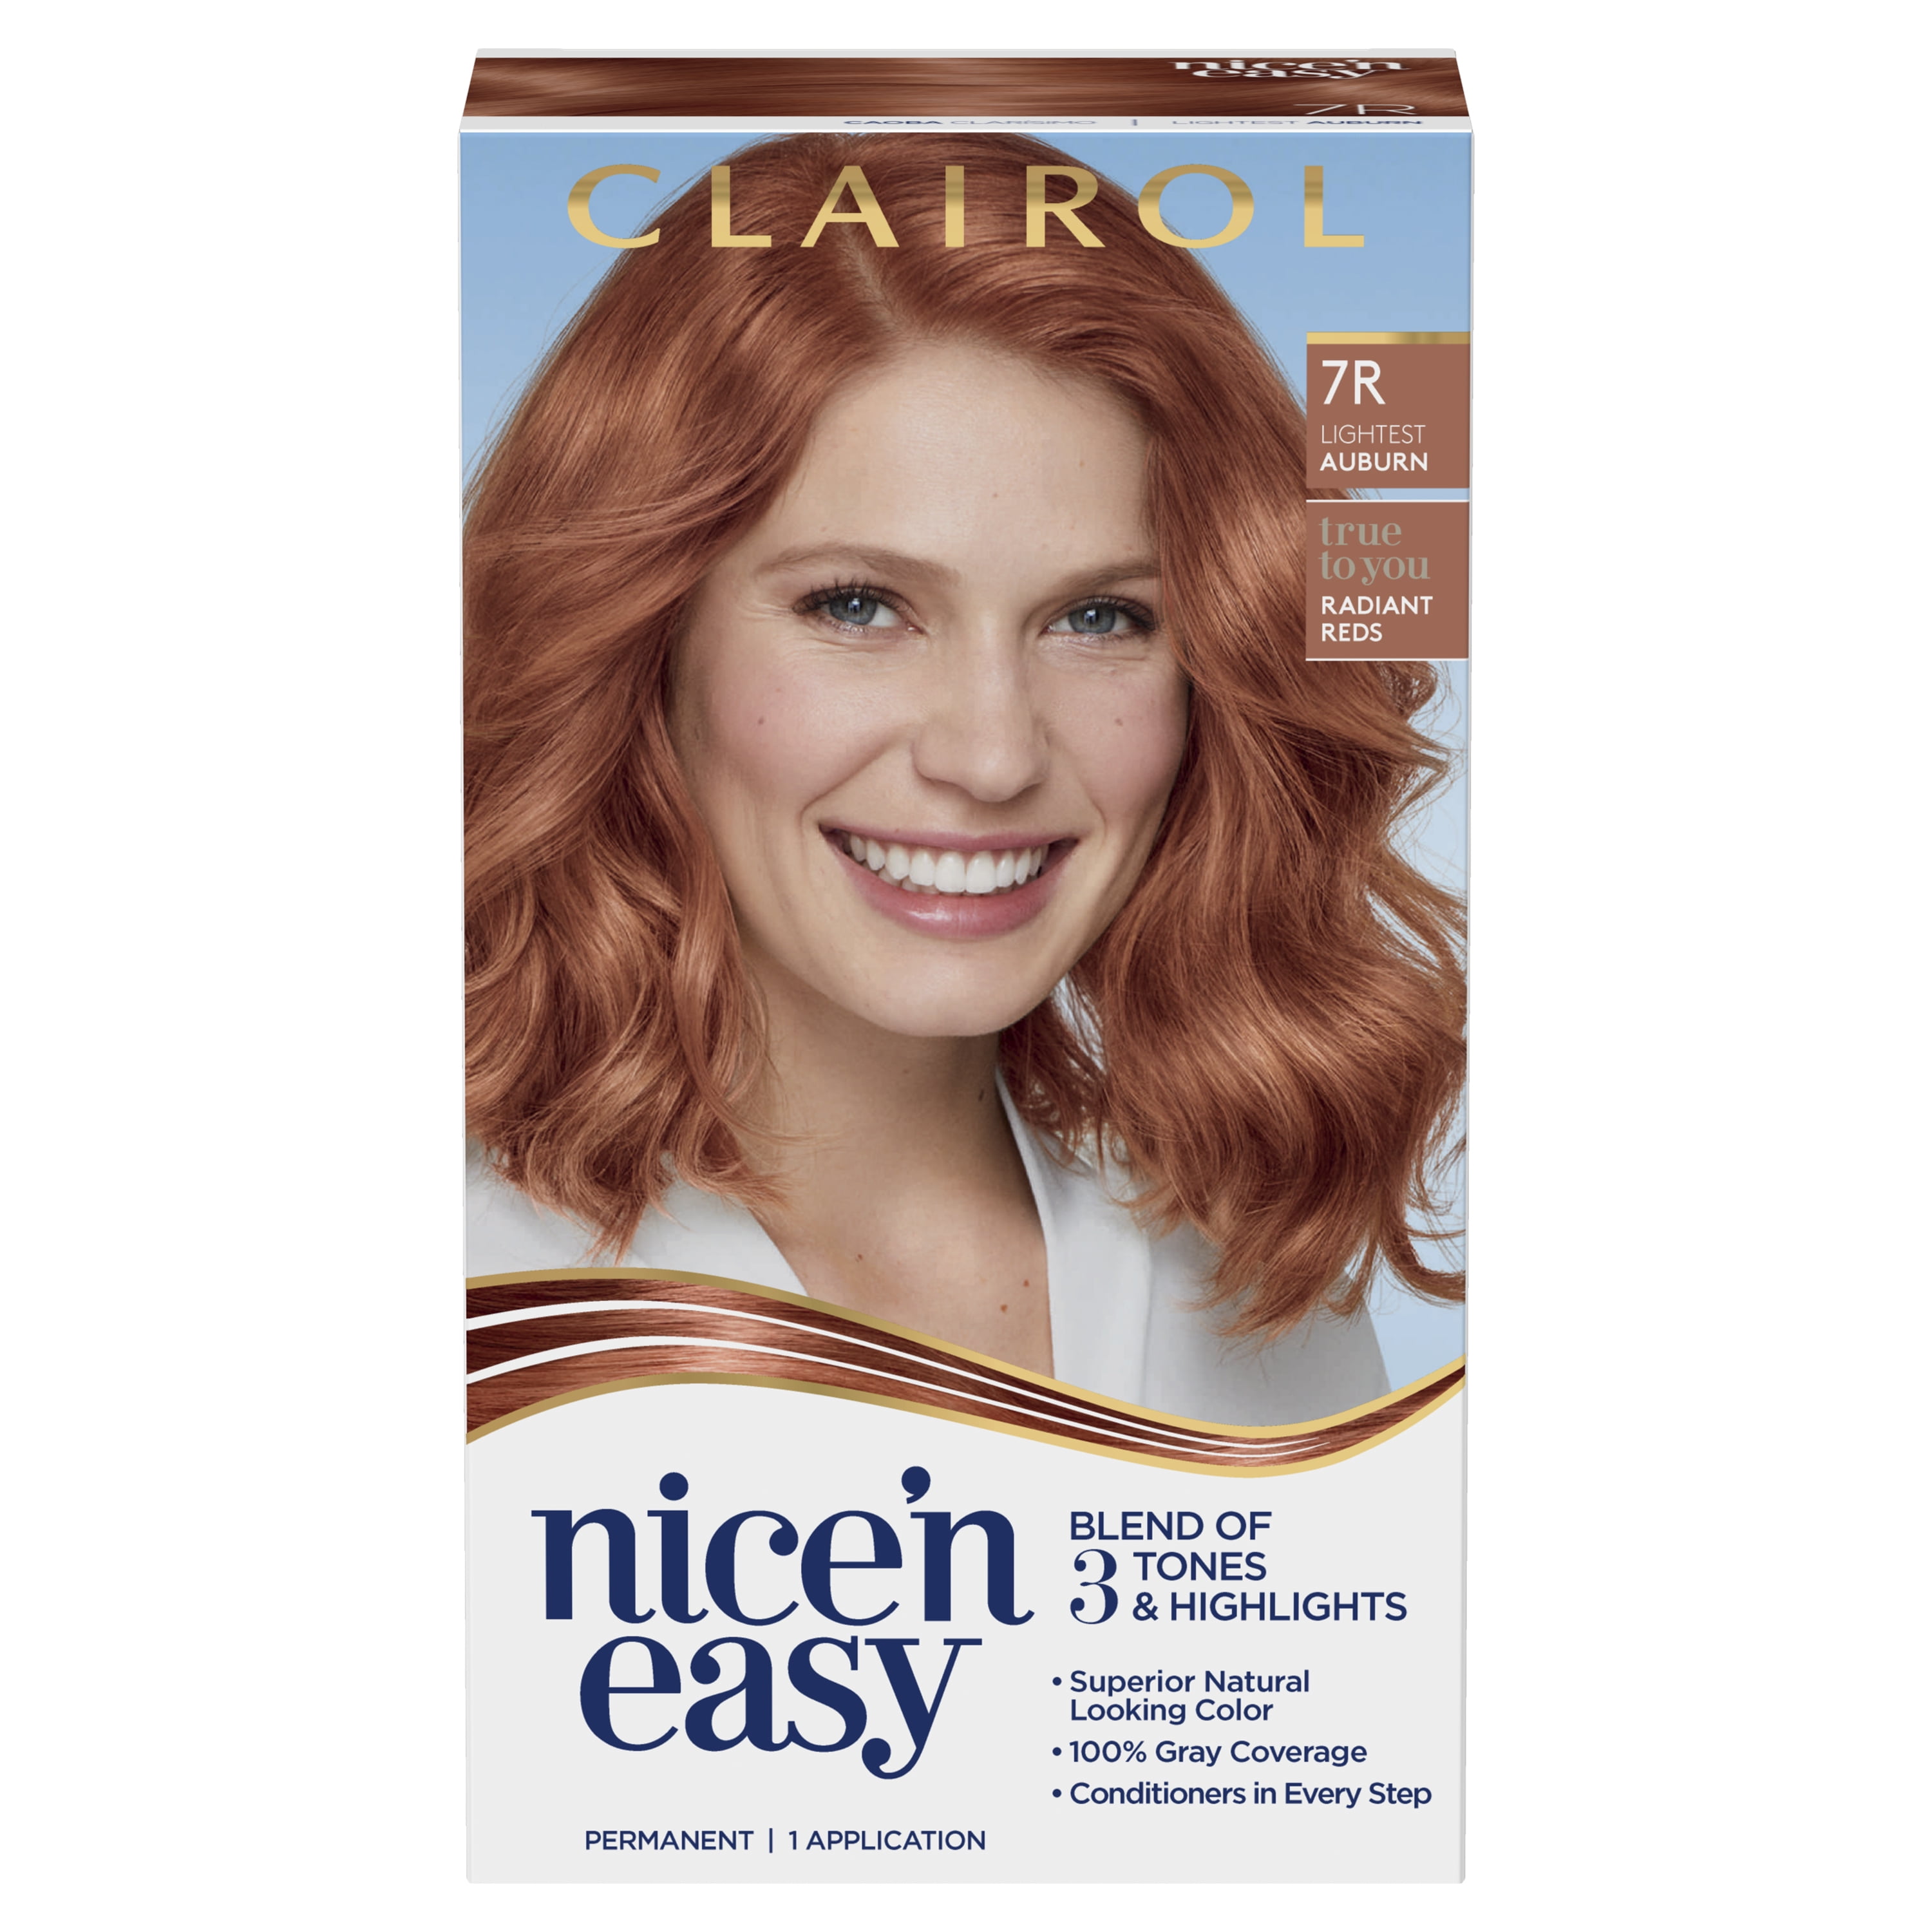 Clairol Nice'n Easy Permanent Hair Color Creme, 7R Lightest Auburn, Hair Dye,  1 Application - Walmart.com